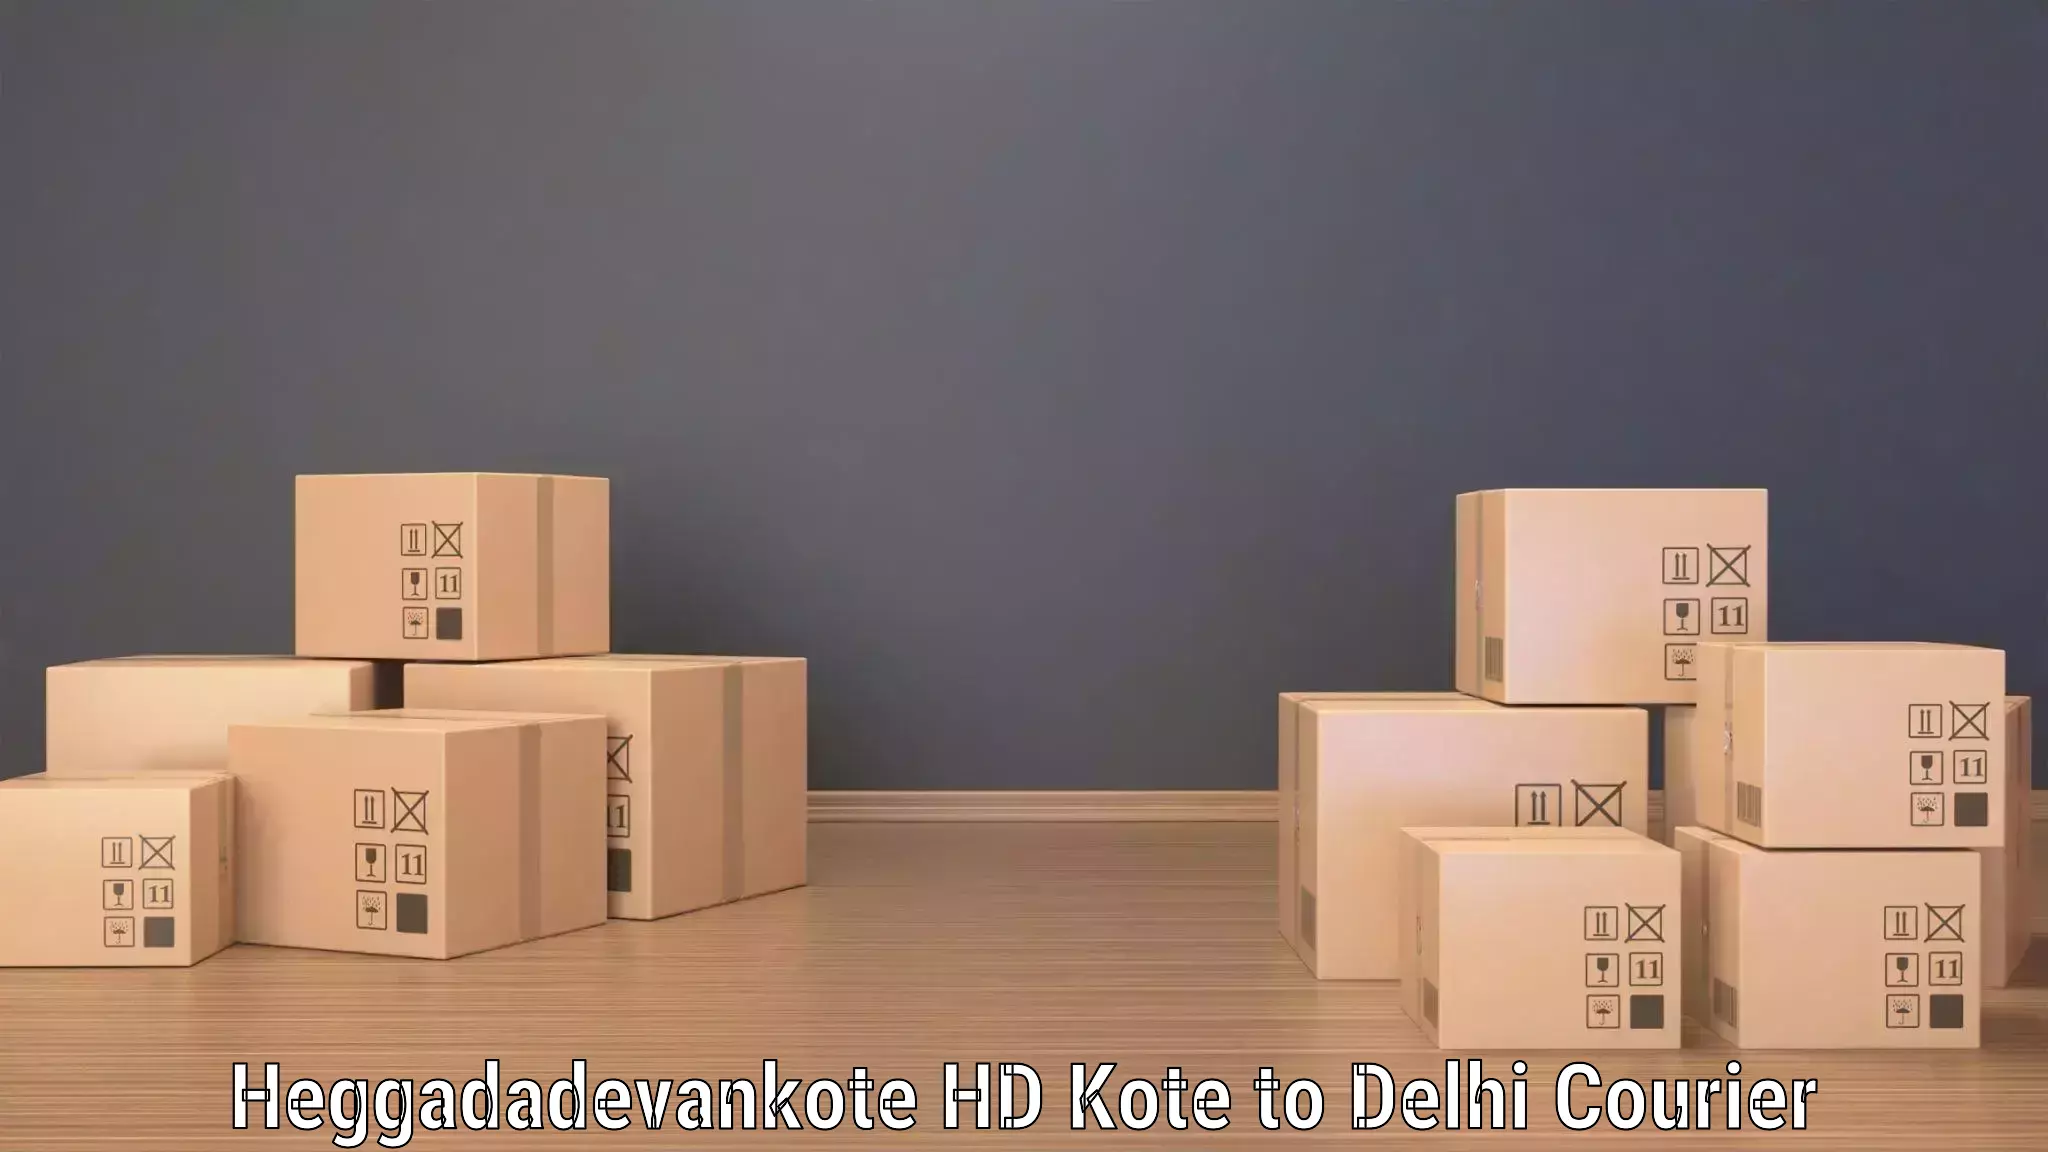 Express delivery solutions Heggadadevankote HD Kote to University of Delhi